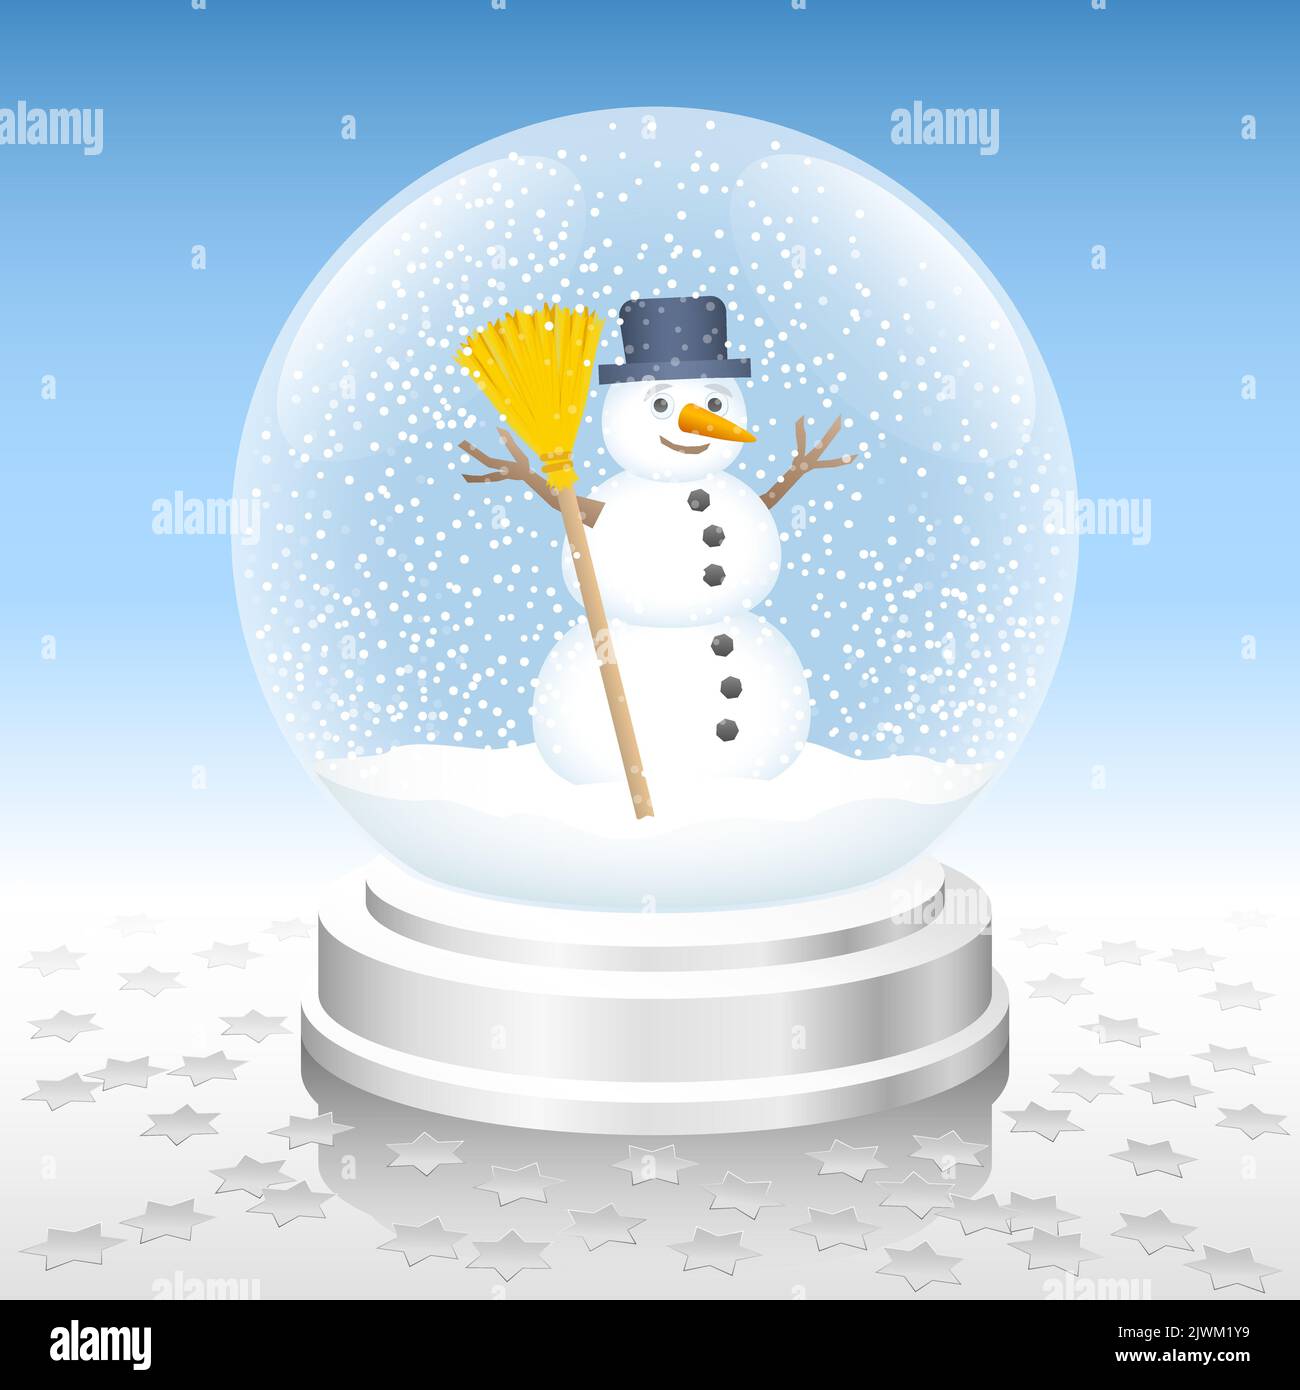 Snow globe with snowman enjoying the snowstorm. Silver base, silver stars deco. Stock Photo